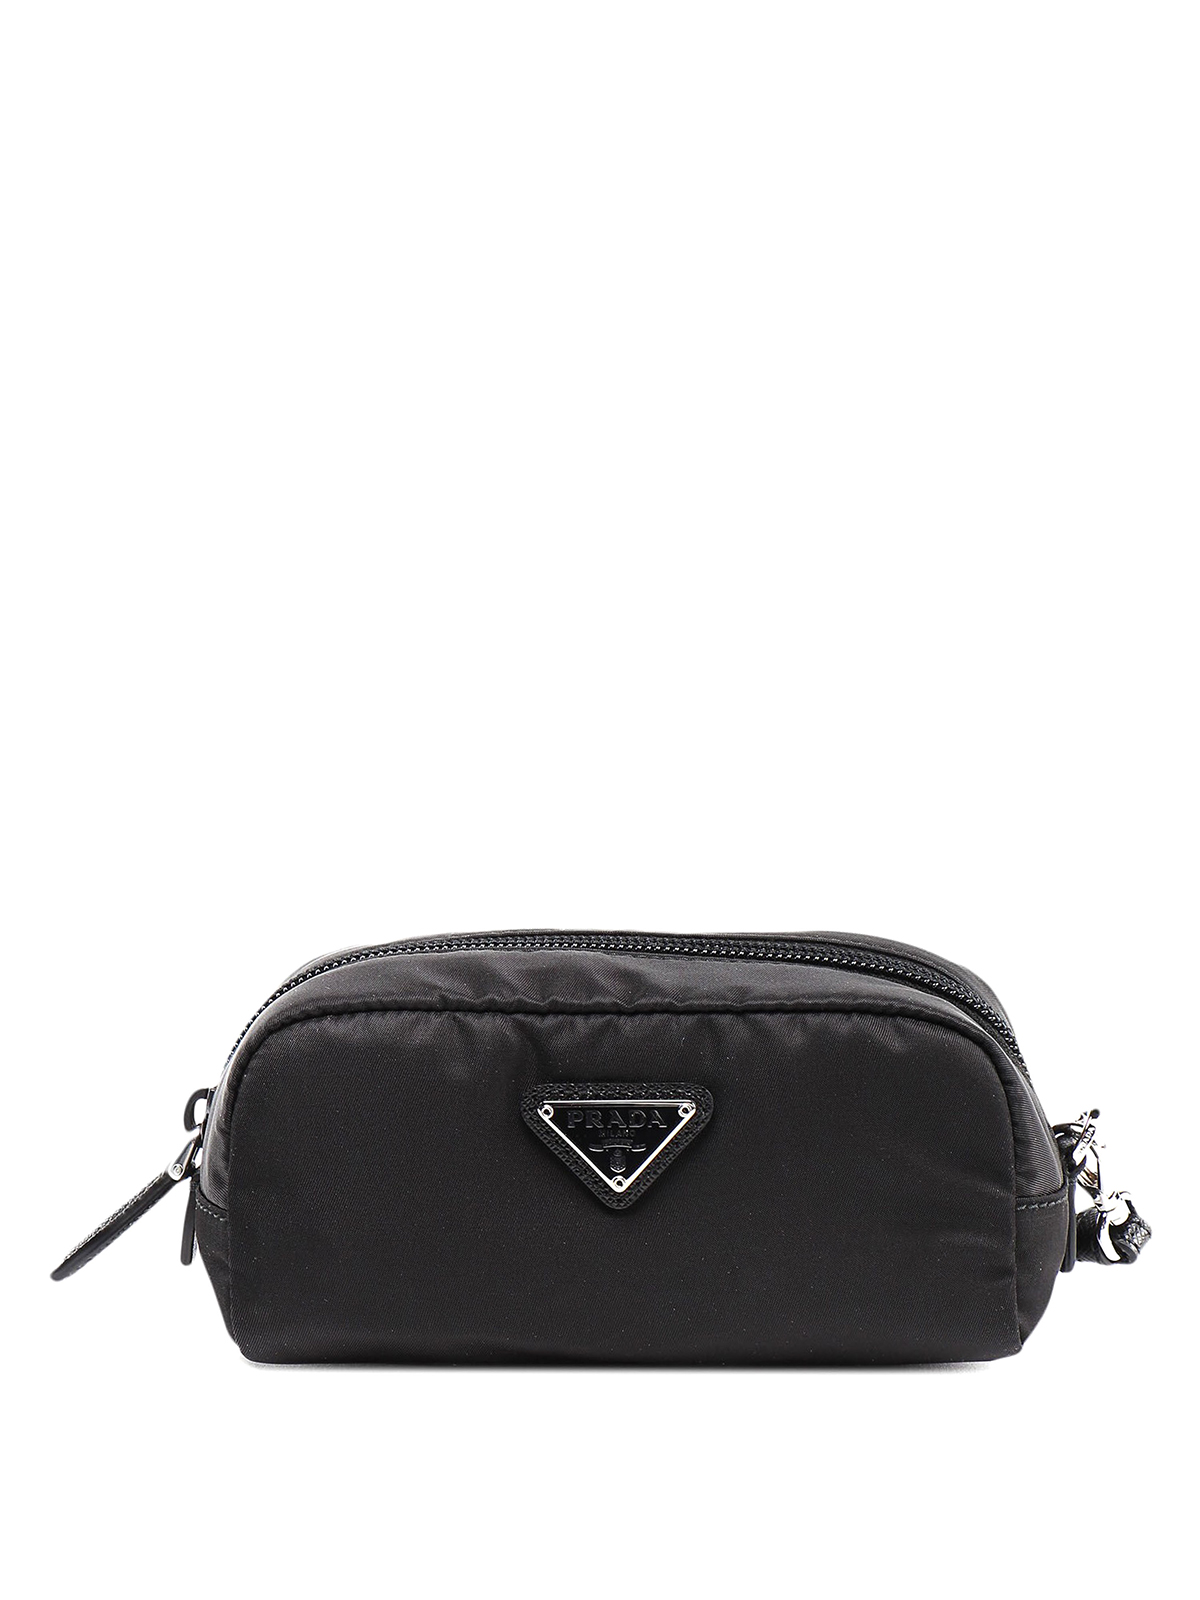 Prada Vela Nylon Beauty Bag Cosmetic Makeup Case - Black